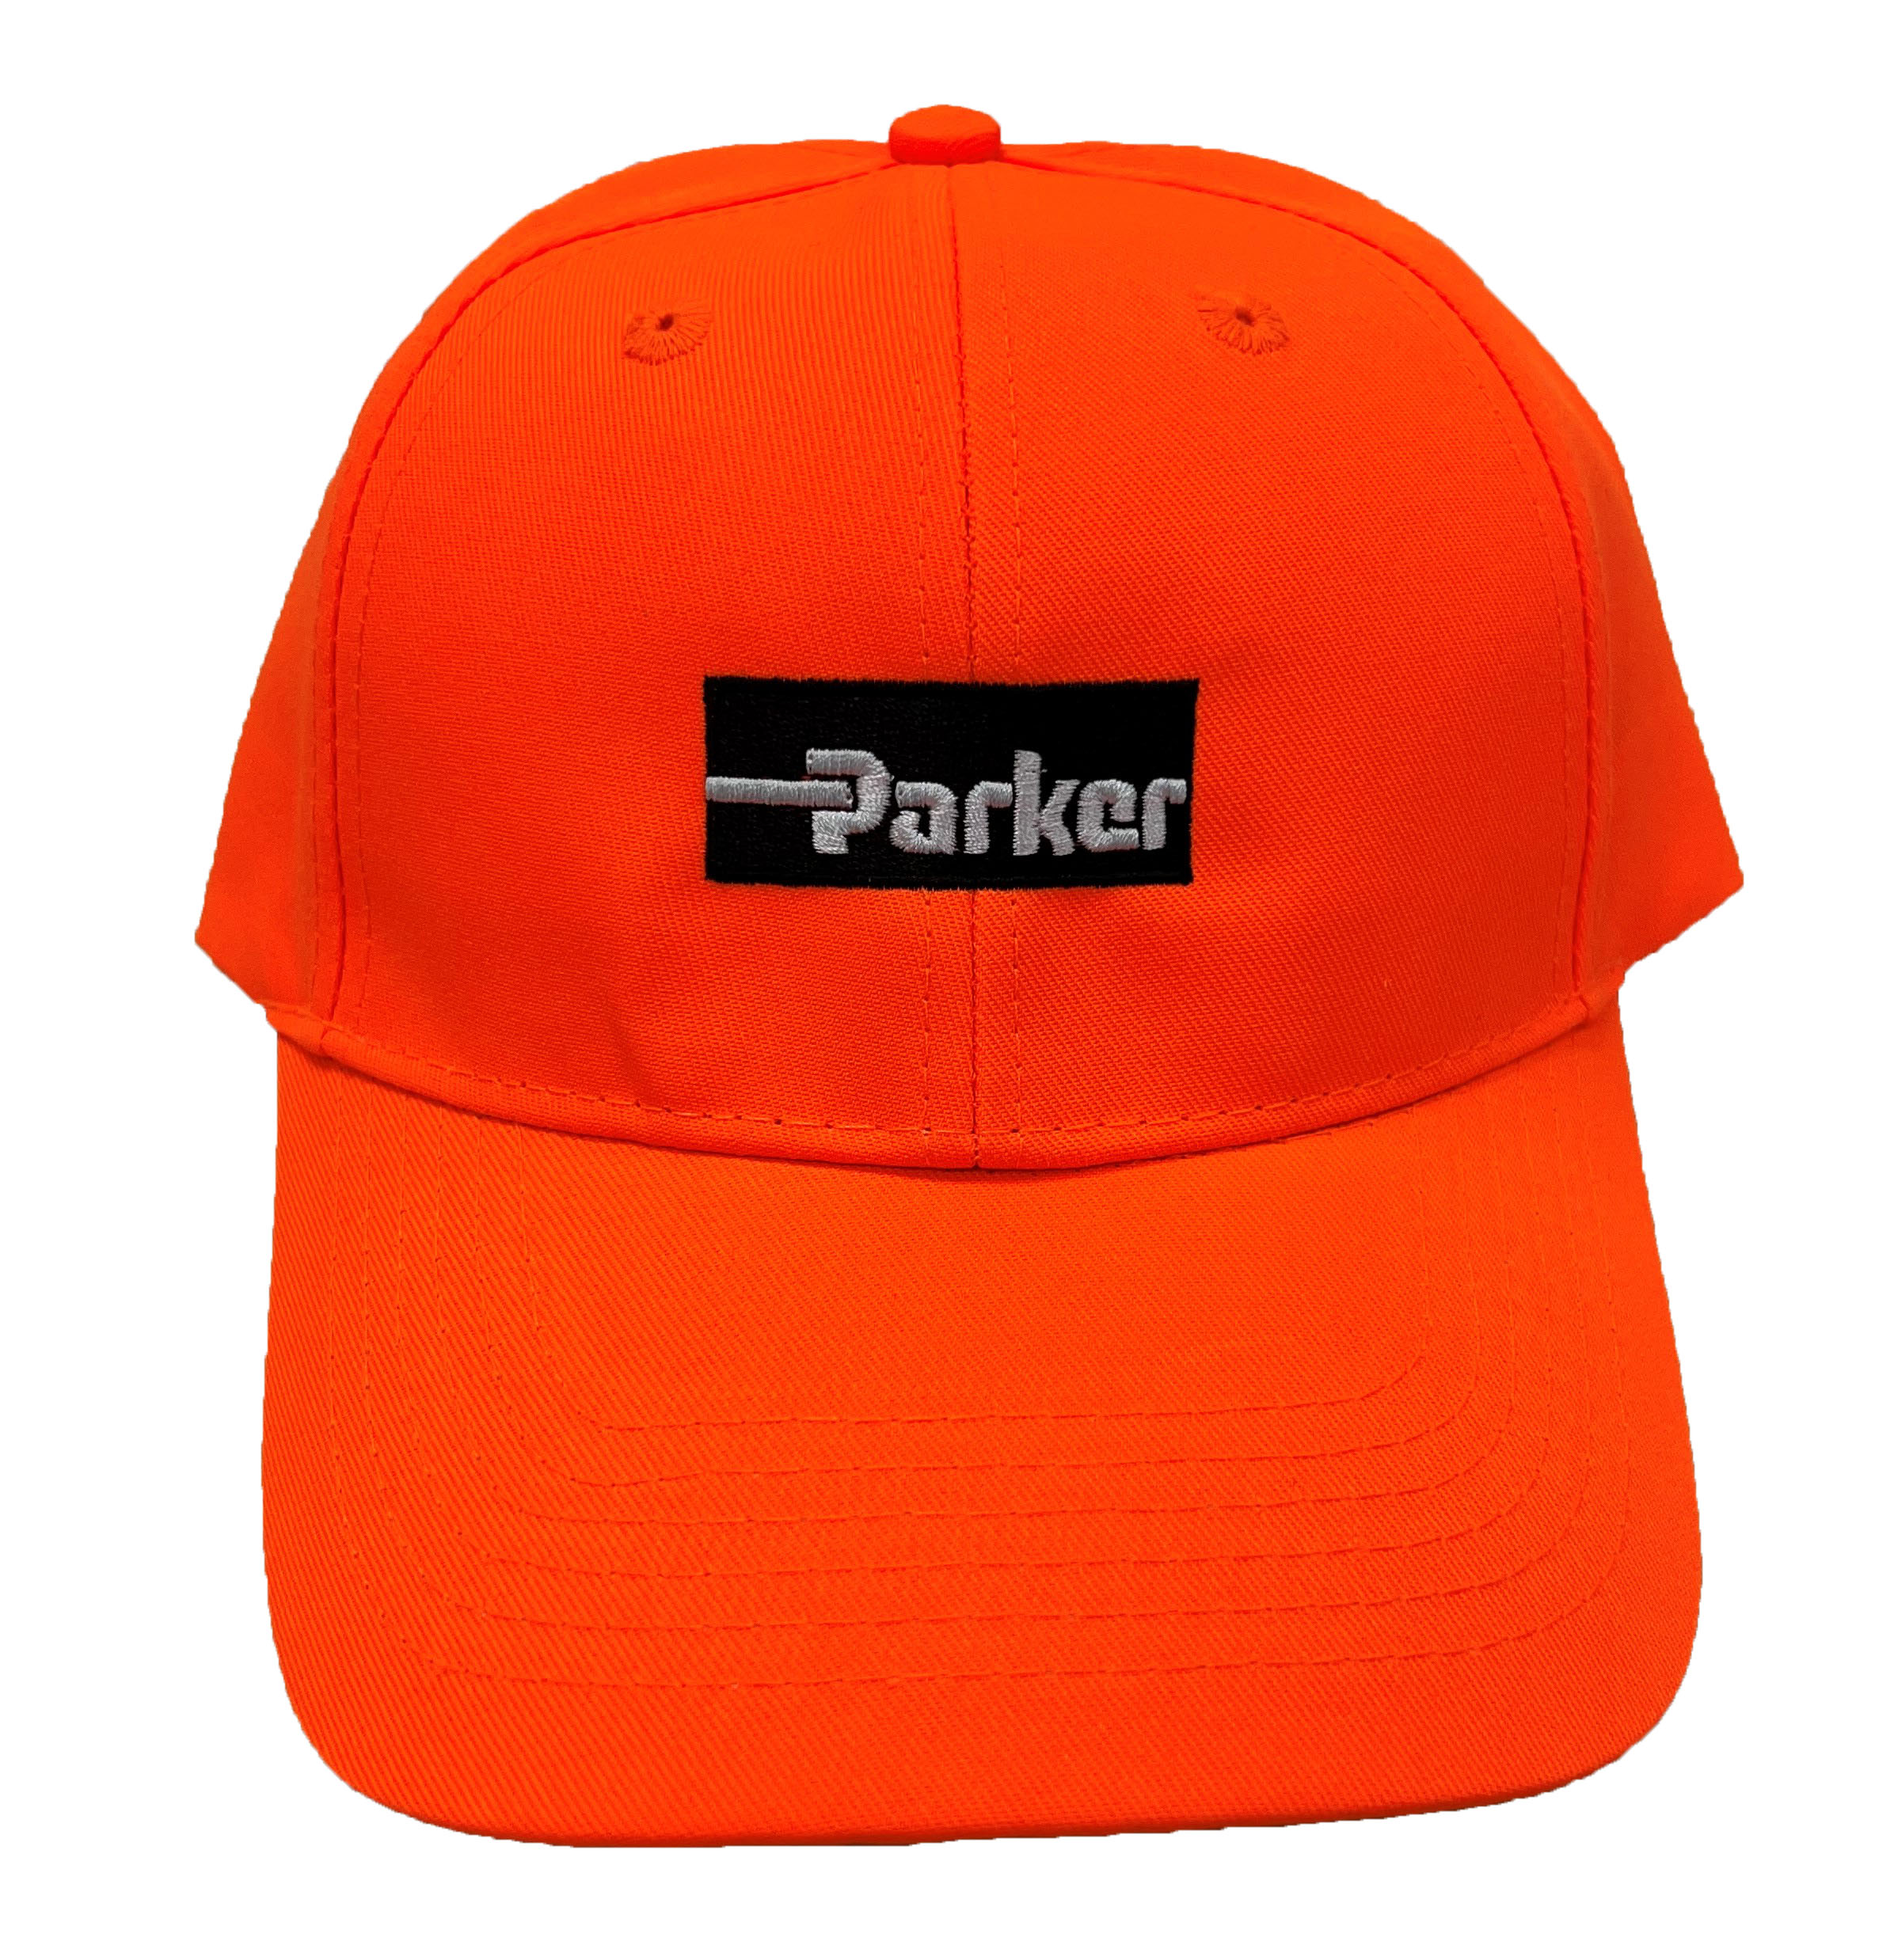 (China) - Authority Safety Cap Port Merchandise Parker :: 1949 [650400] & Orange Store Safety Health